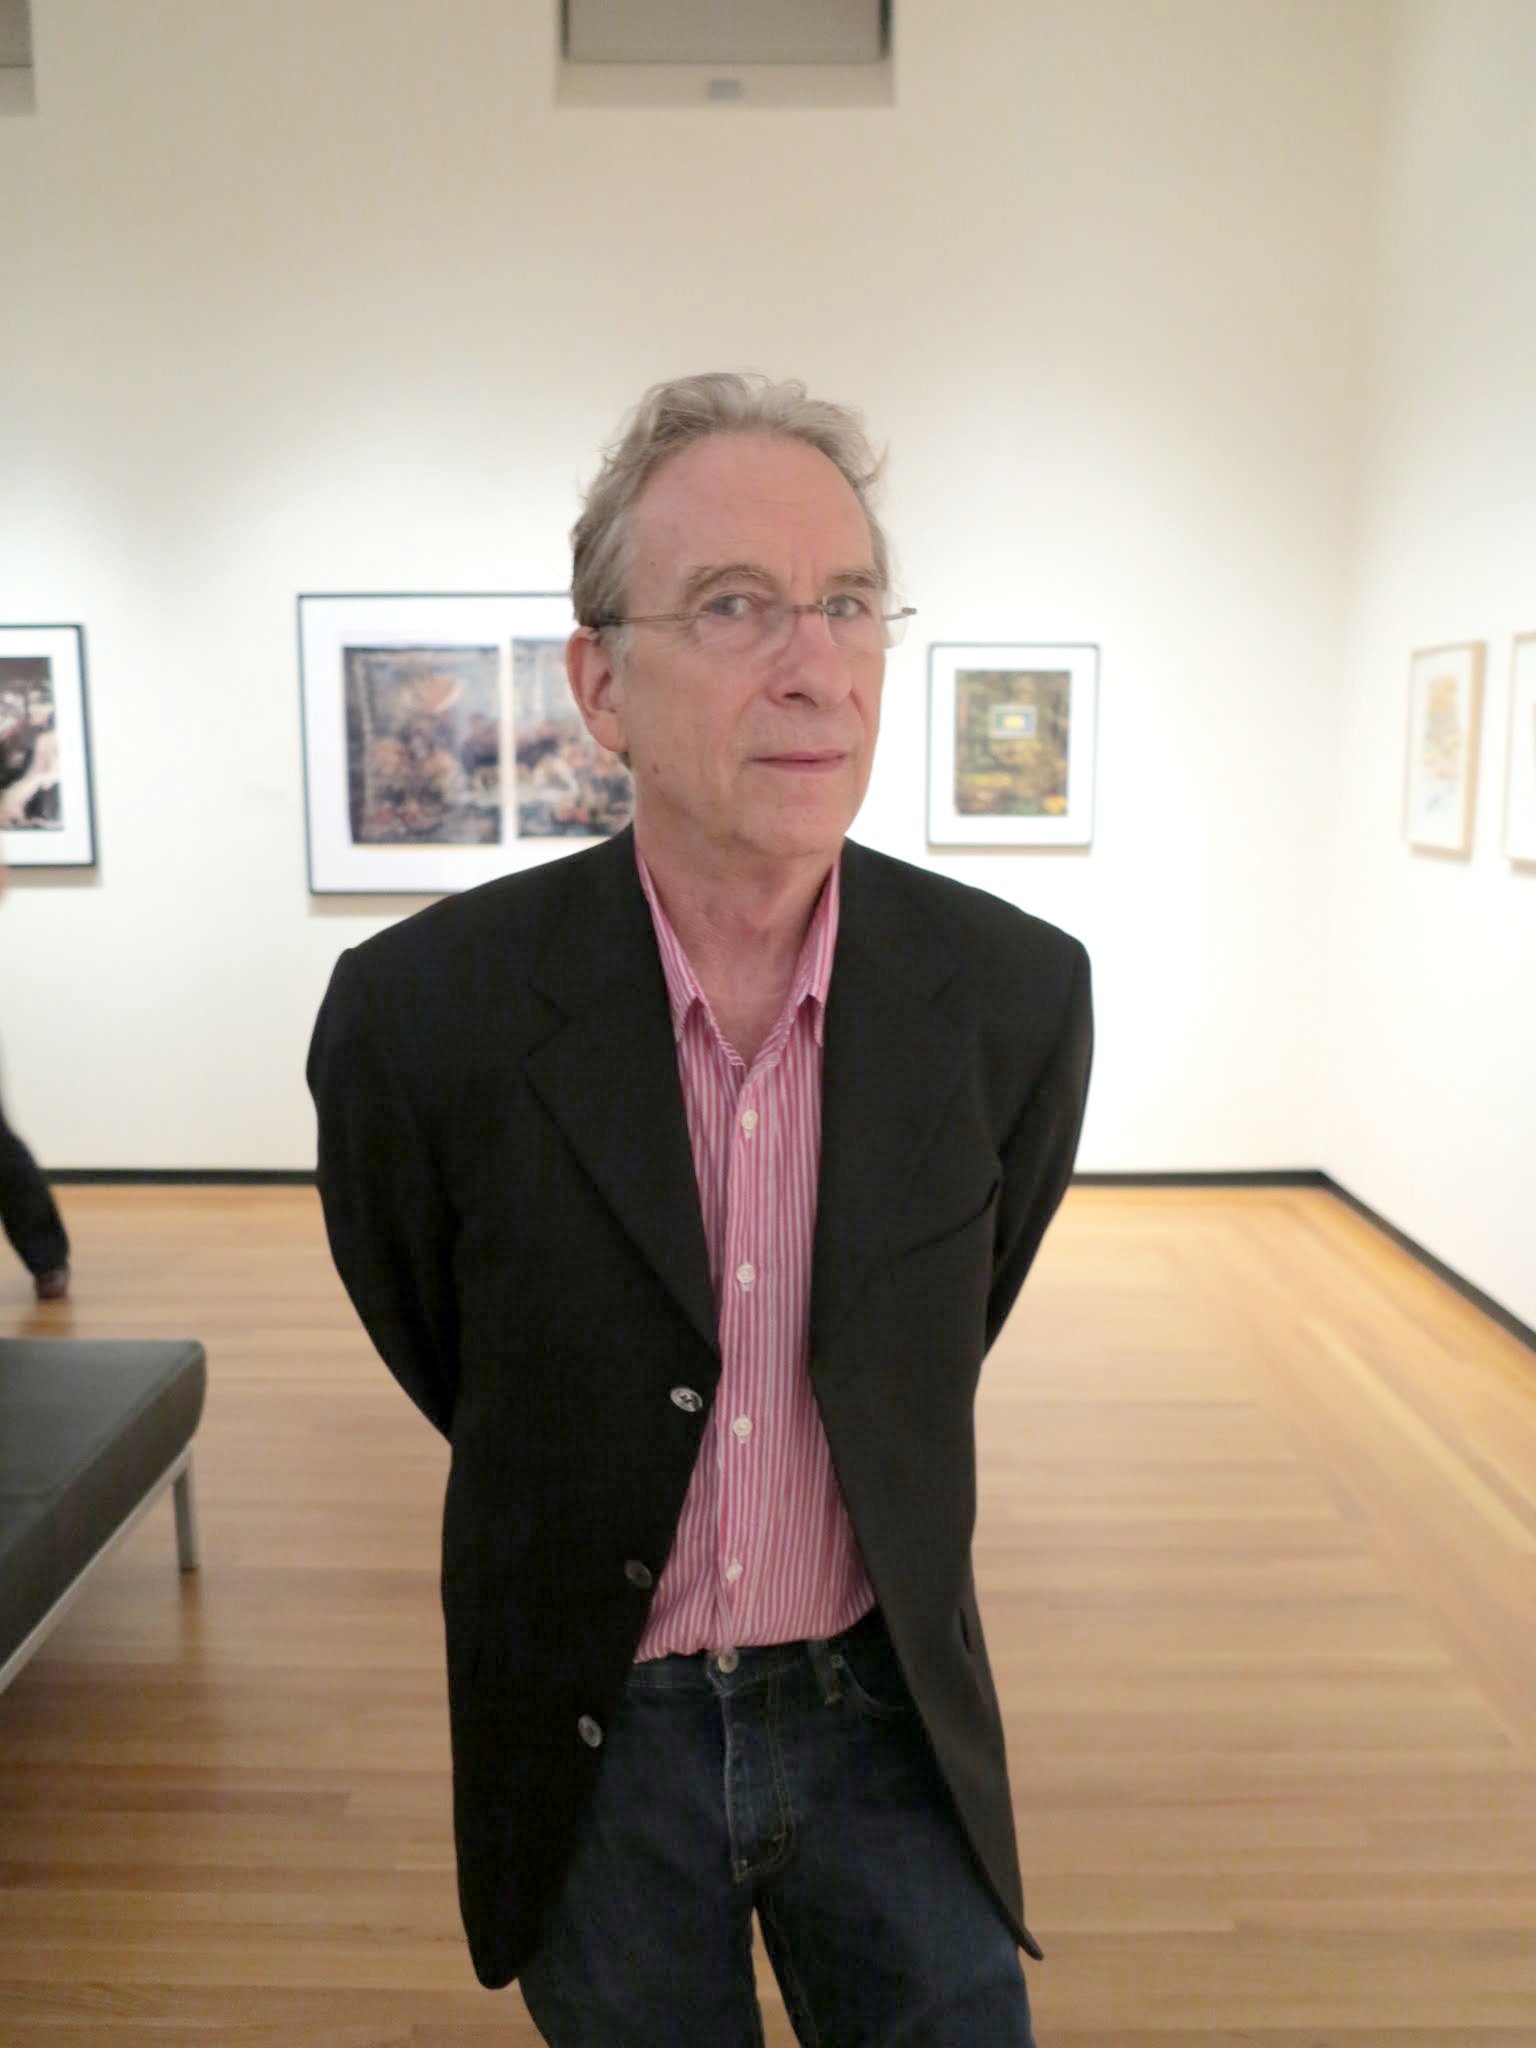 Attending a William Wegman Exhibit at the Bowdoin College